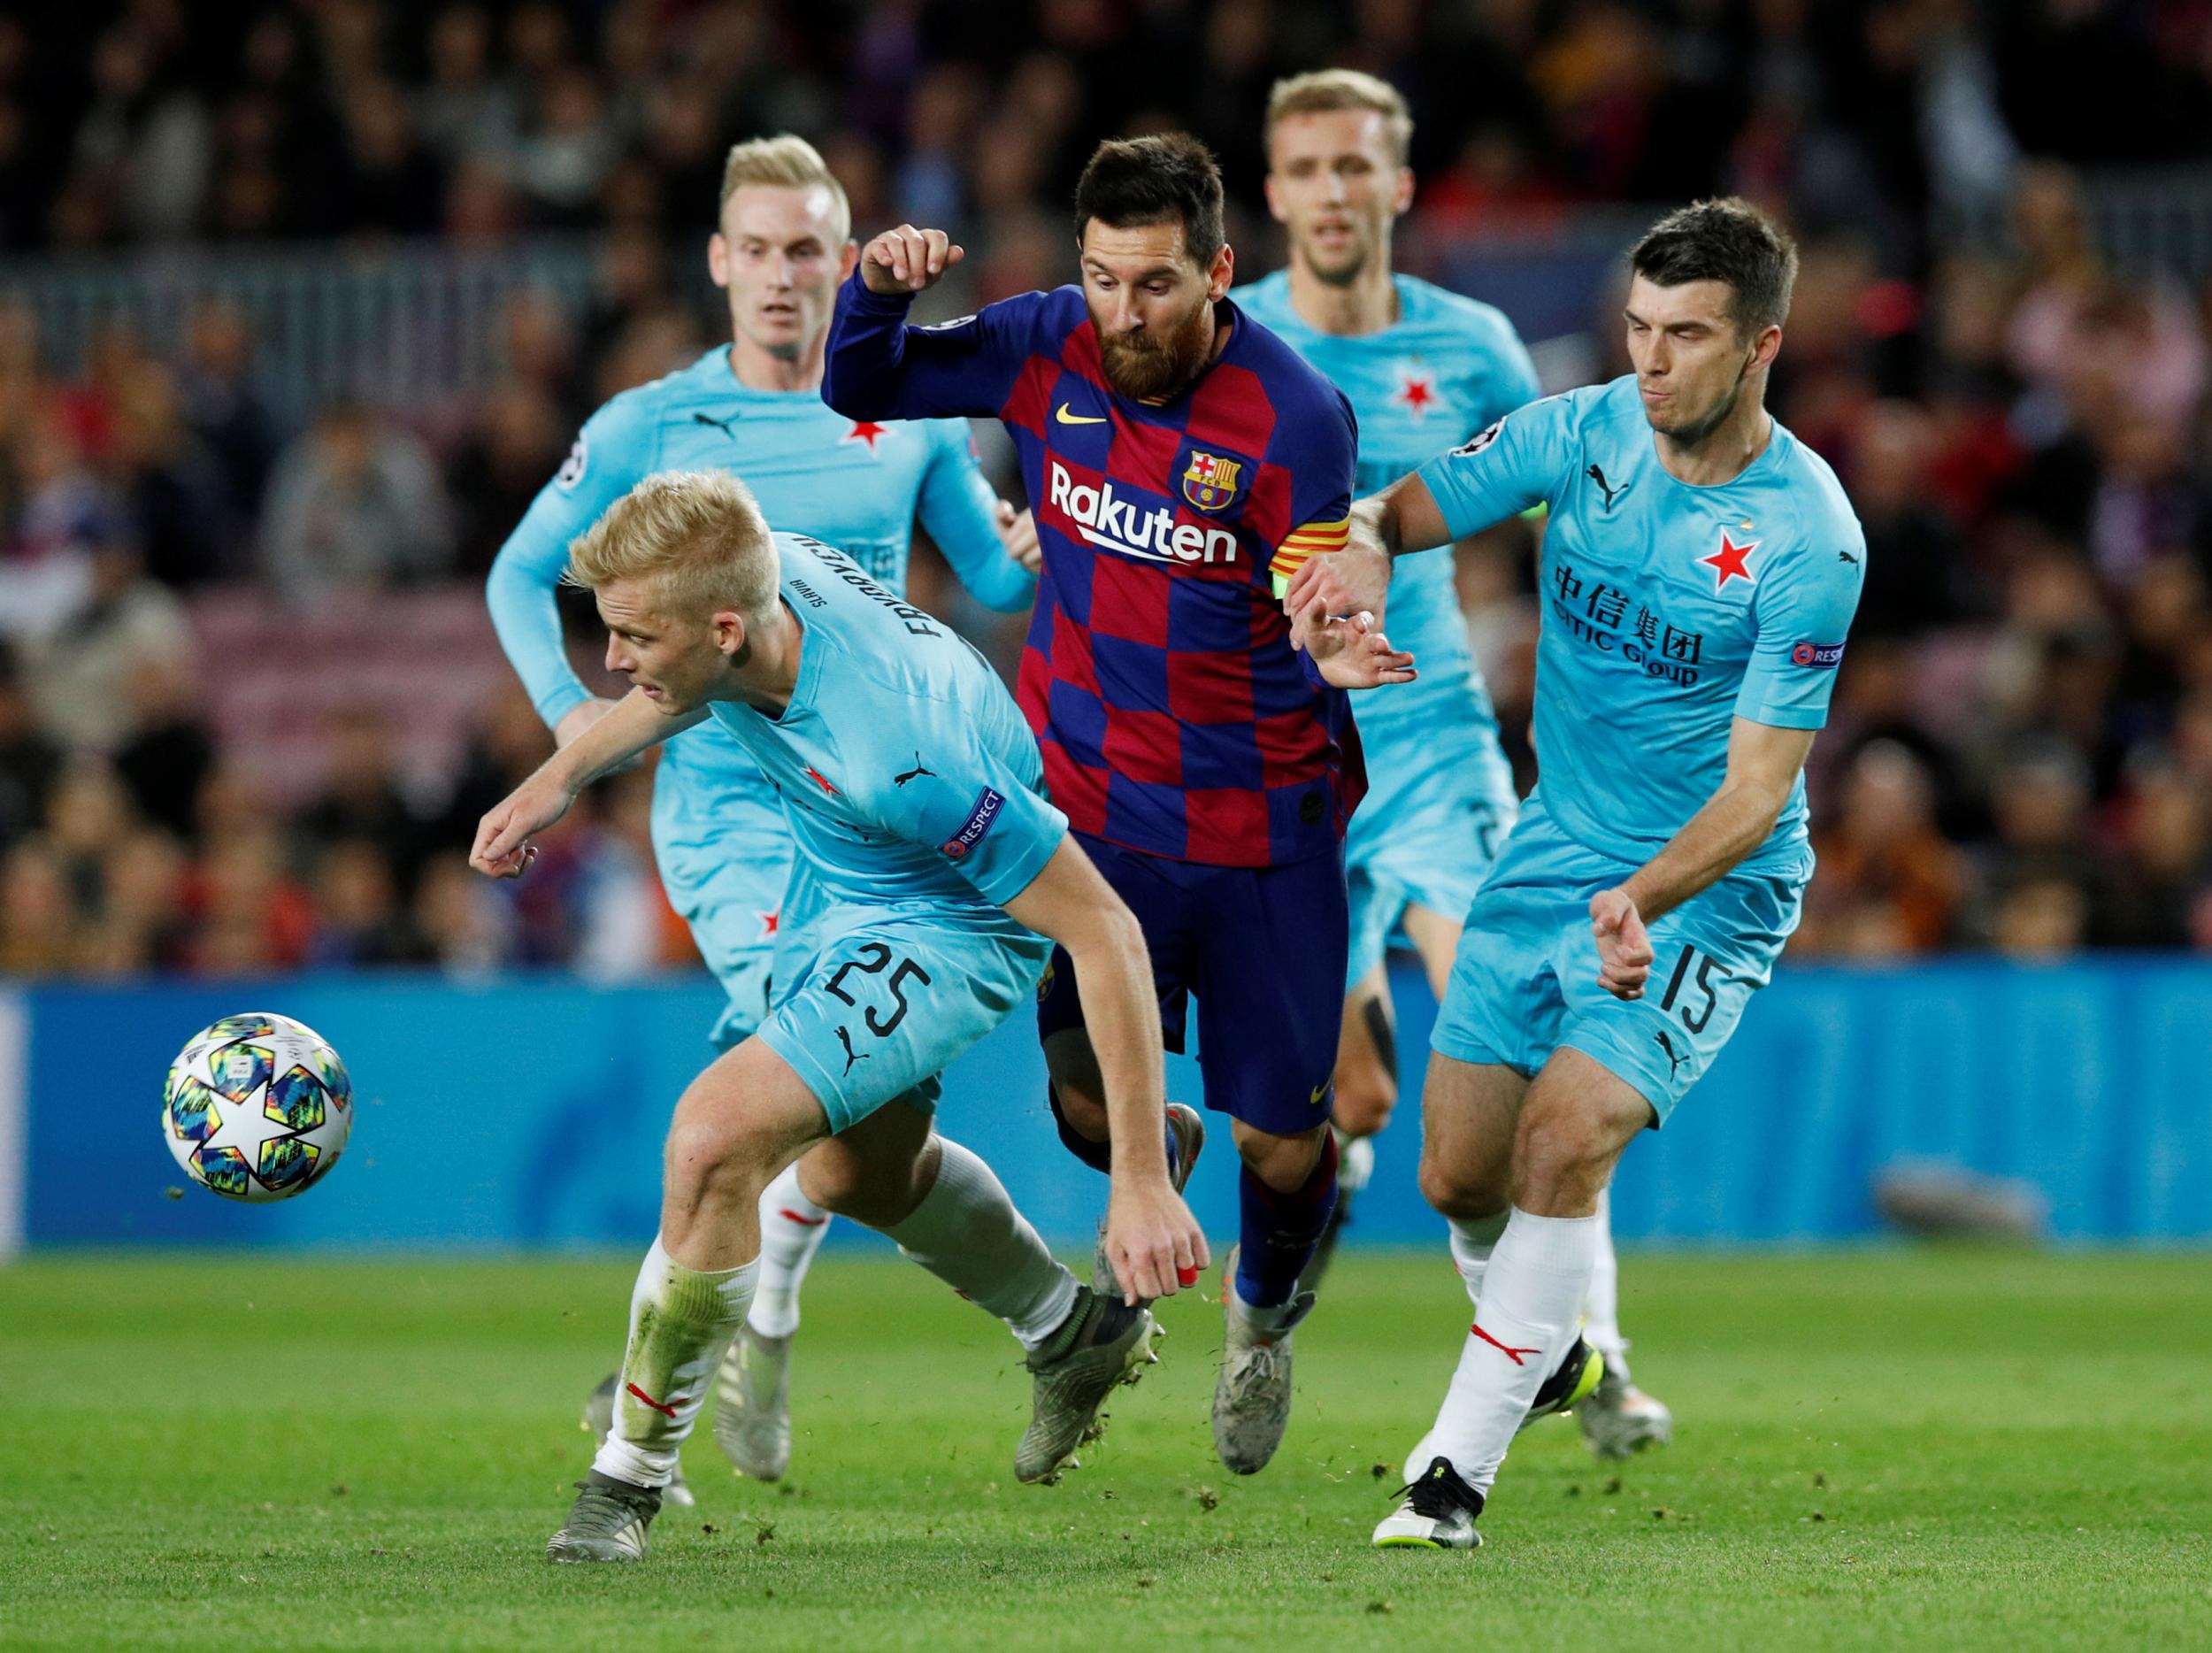 Barcelona 0-0 Slavia Prague - Champions League 2019/20: RESULT